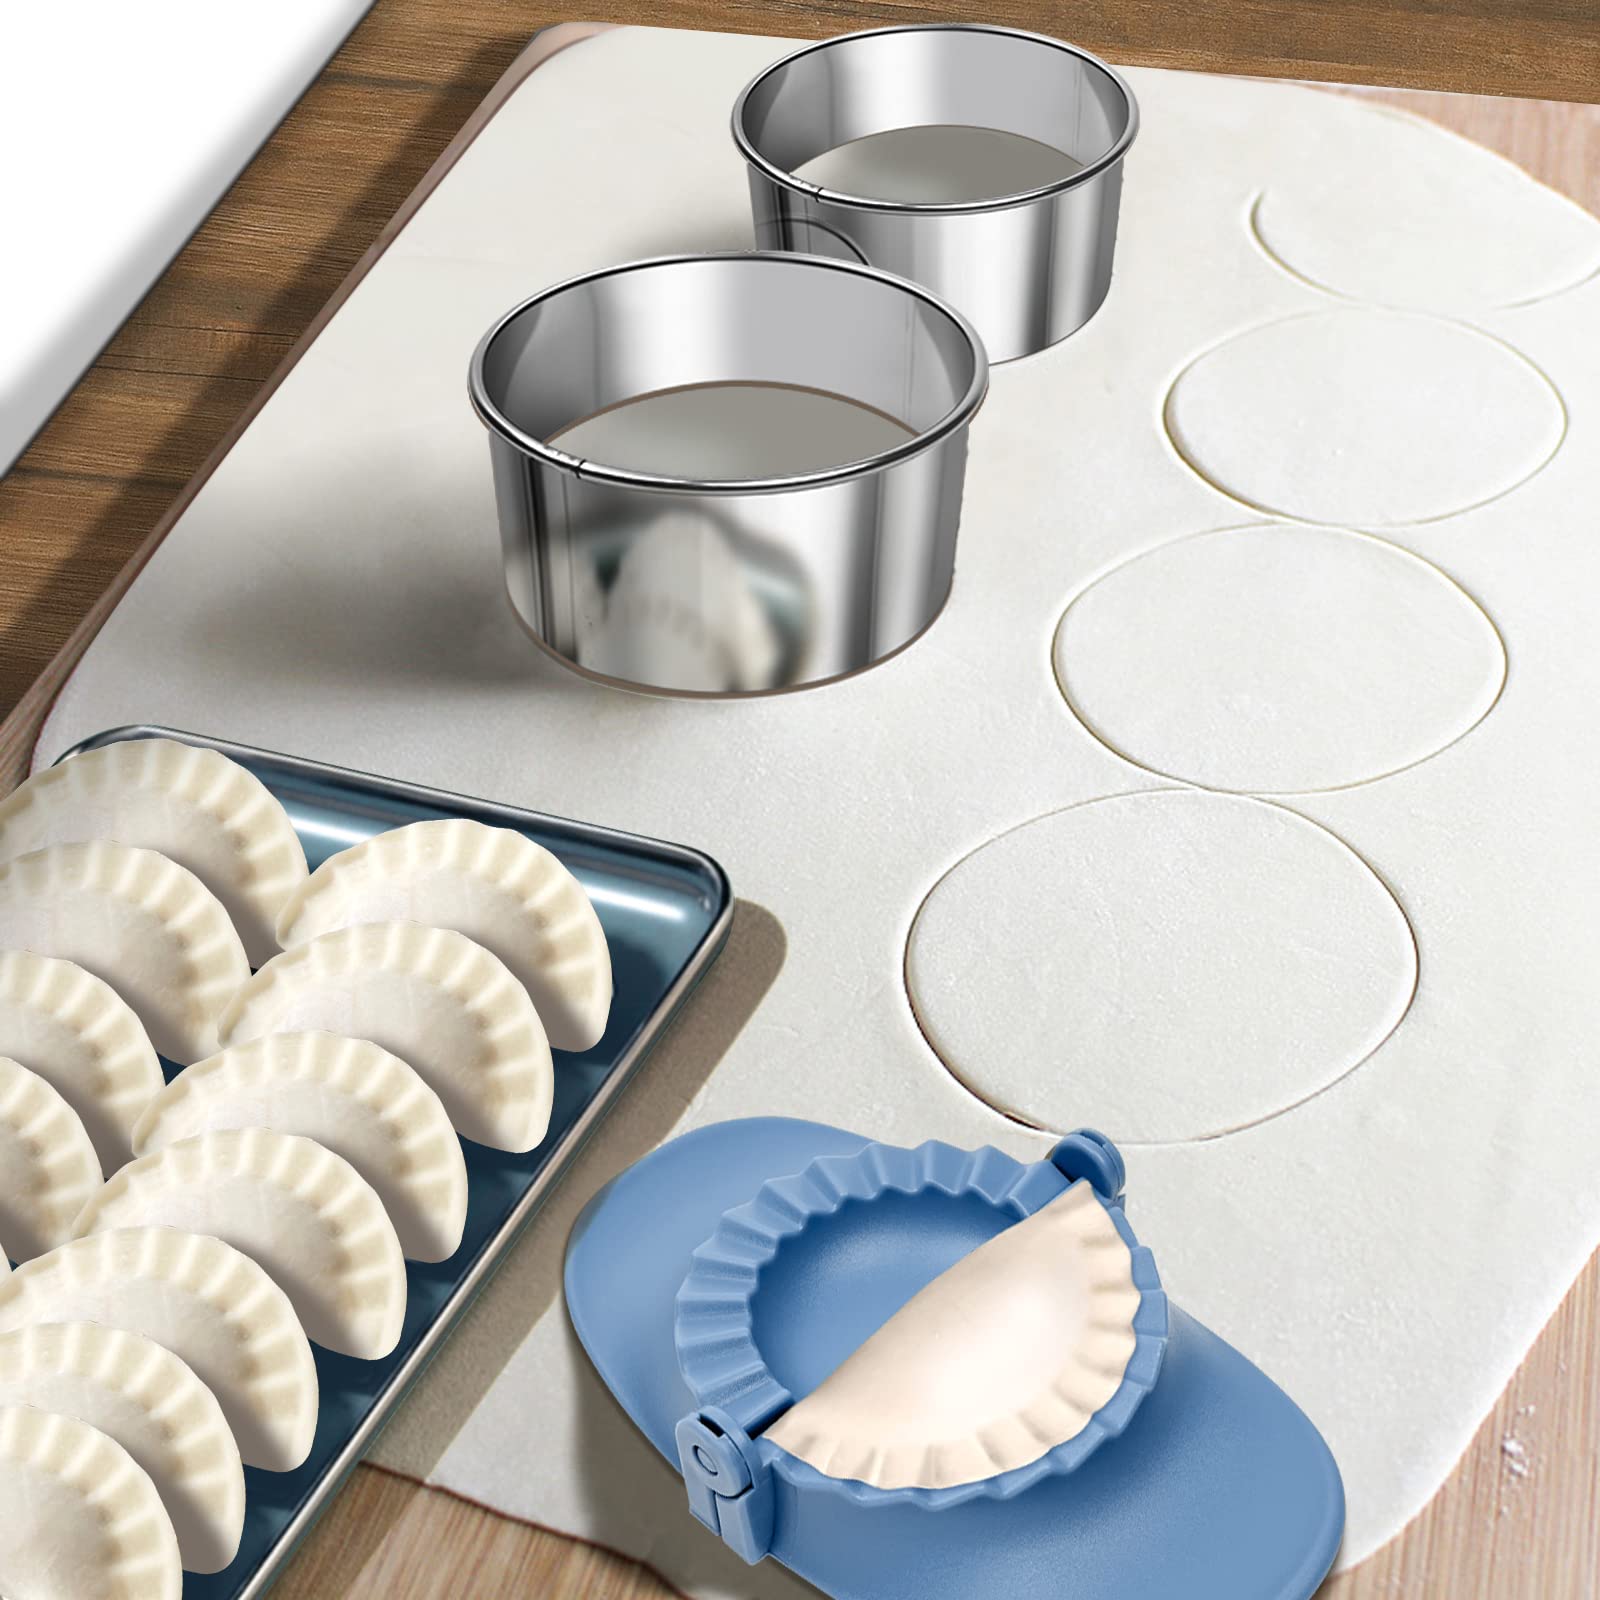 Dumpling Maker Press，Empanadas Maker Press，Dumpling Mold Machine-Make Perfect Dumplings Every Time，3Sizes (L/3.7